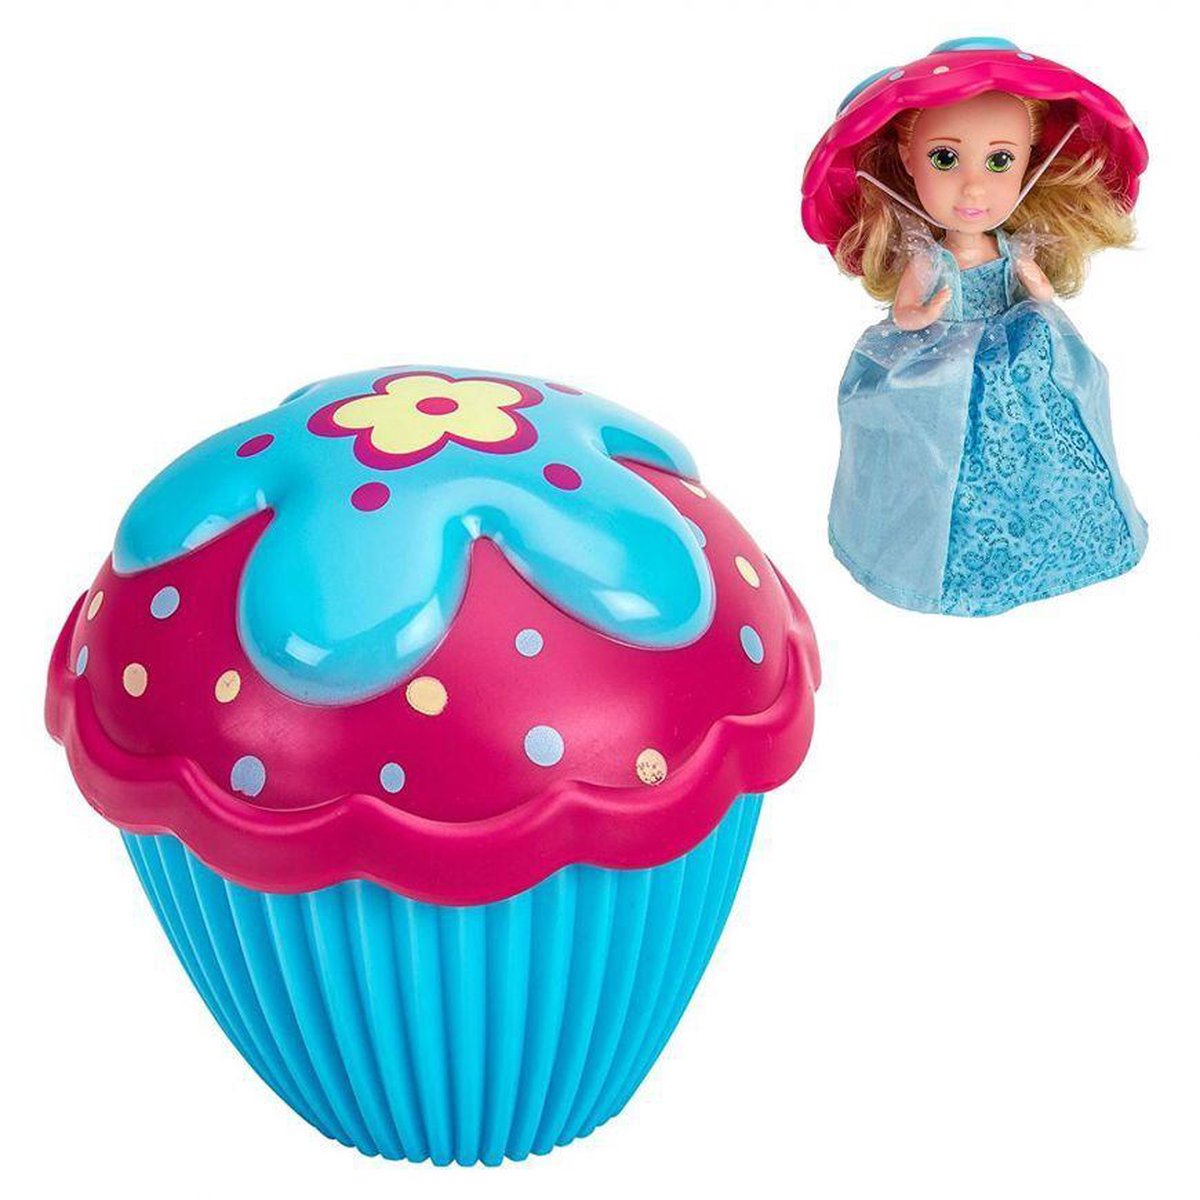 Cupcake Surprise Doll - Verander cupcake in een geurend Prinsessen Pop! | bol.com